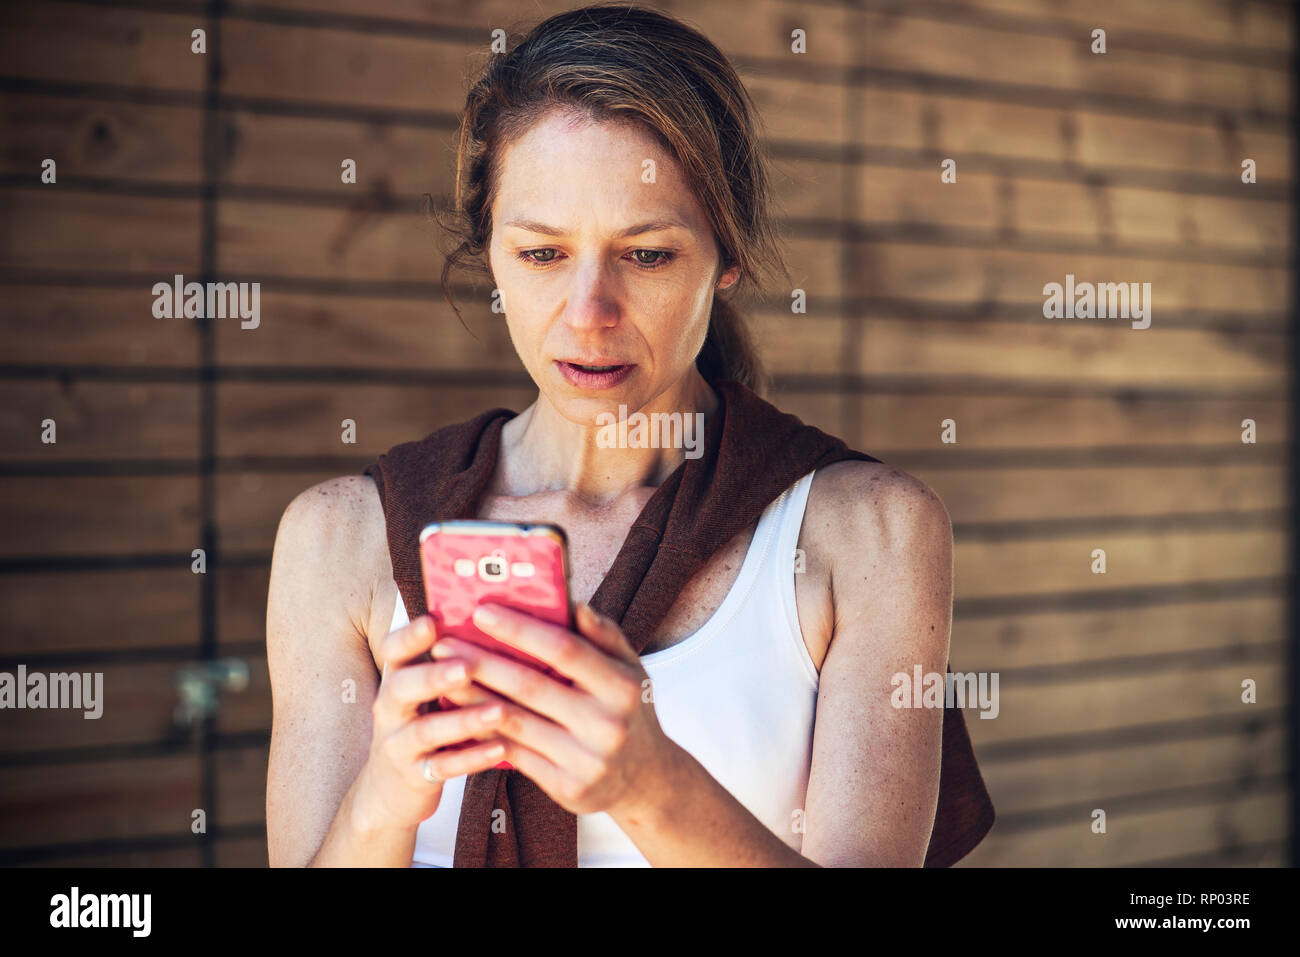 Serious mature woman looking at smart phone Stock Photo